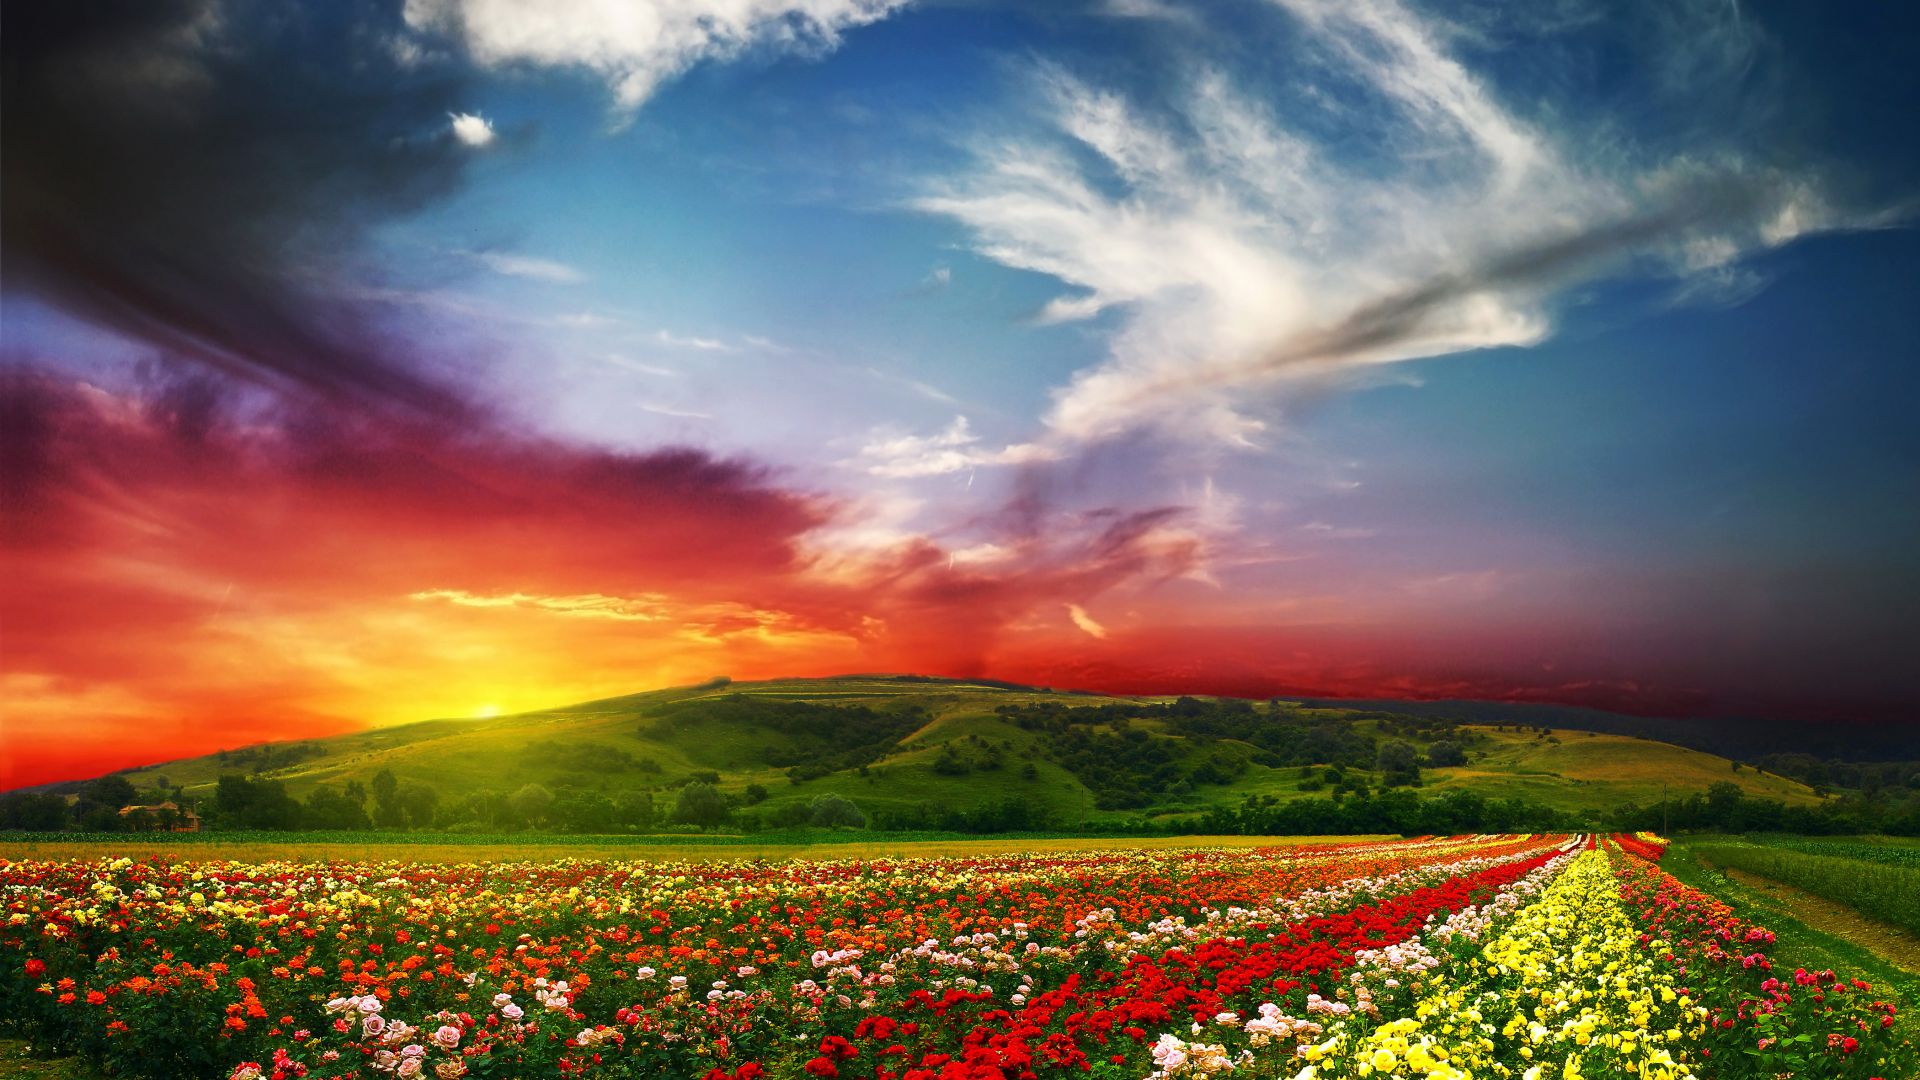 Индия, 5k, 4k, Долина Цветов, Луга, розы, закат, облака, India, 5k, 4k wallpaper, Valley of Flowers, Meadows, roses, sunset, clouds (horizontal)